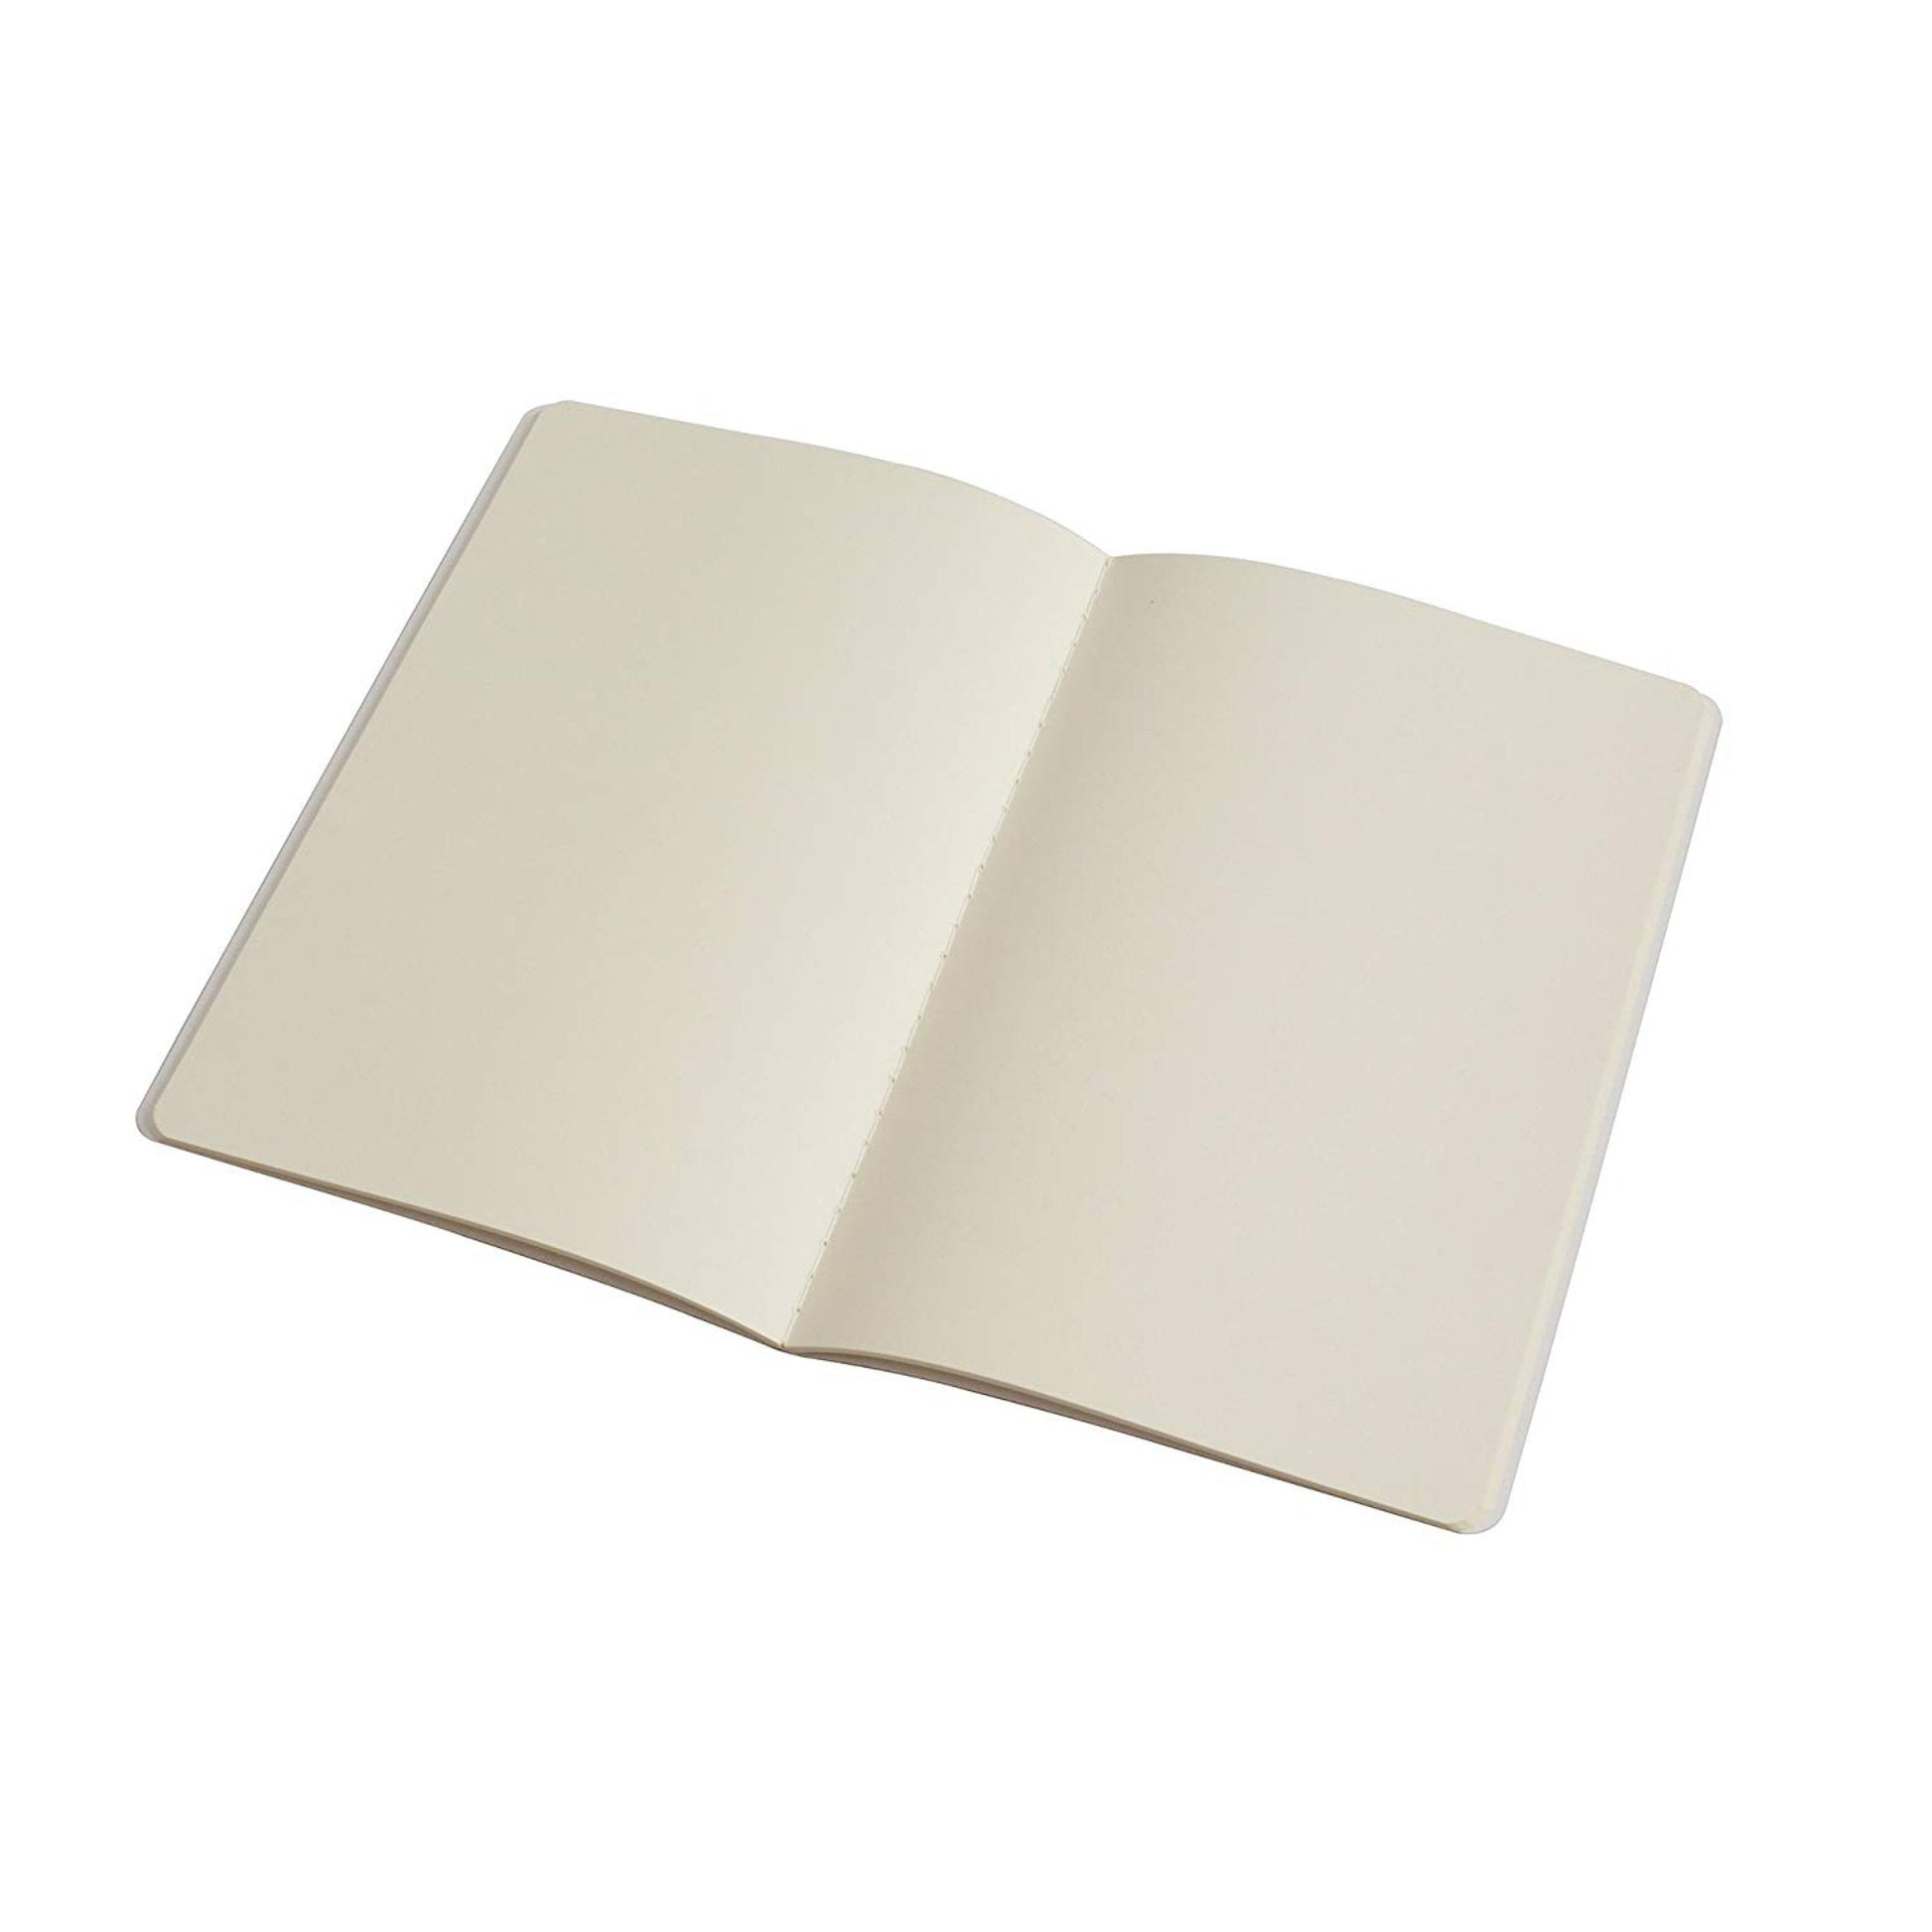 PinkPolish Design Notebook "Nasturtium" Notebook / Sketchbook / Journal